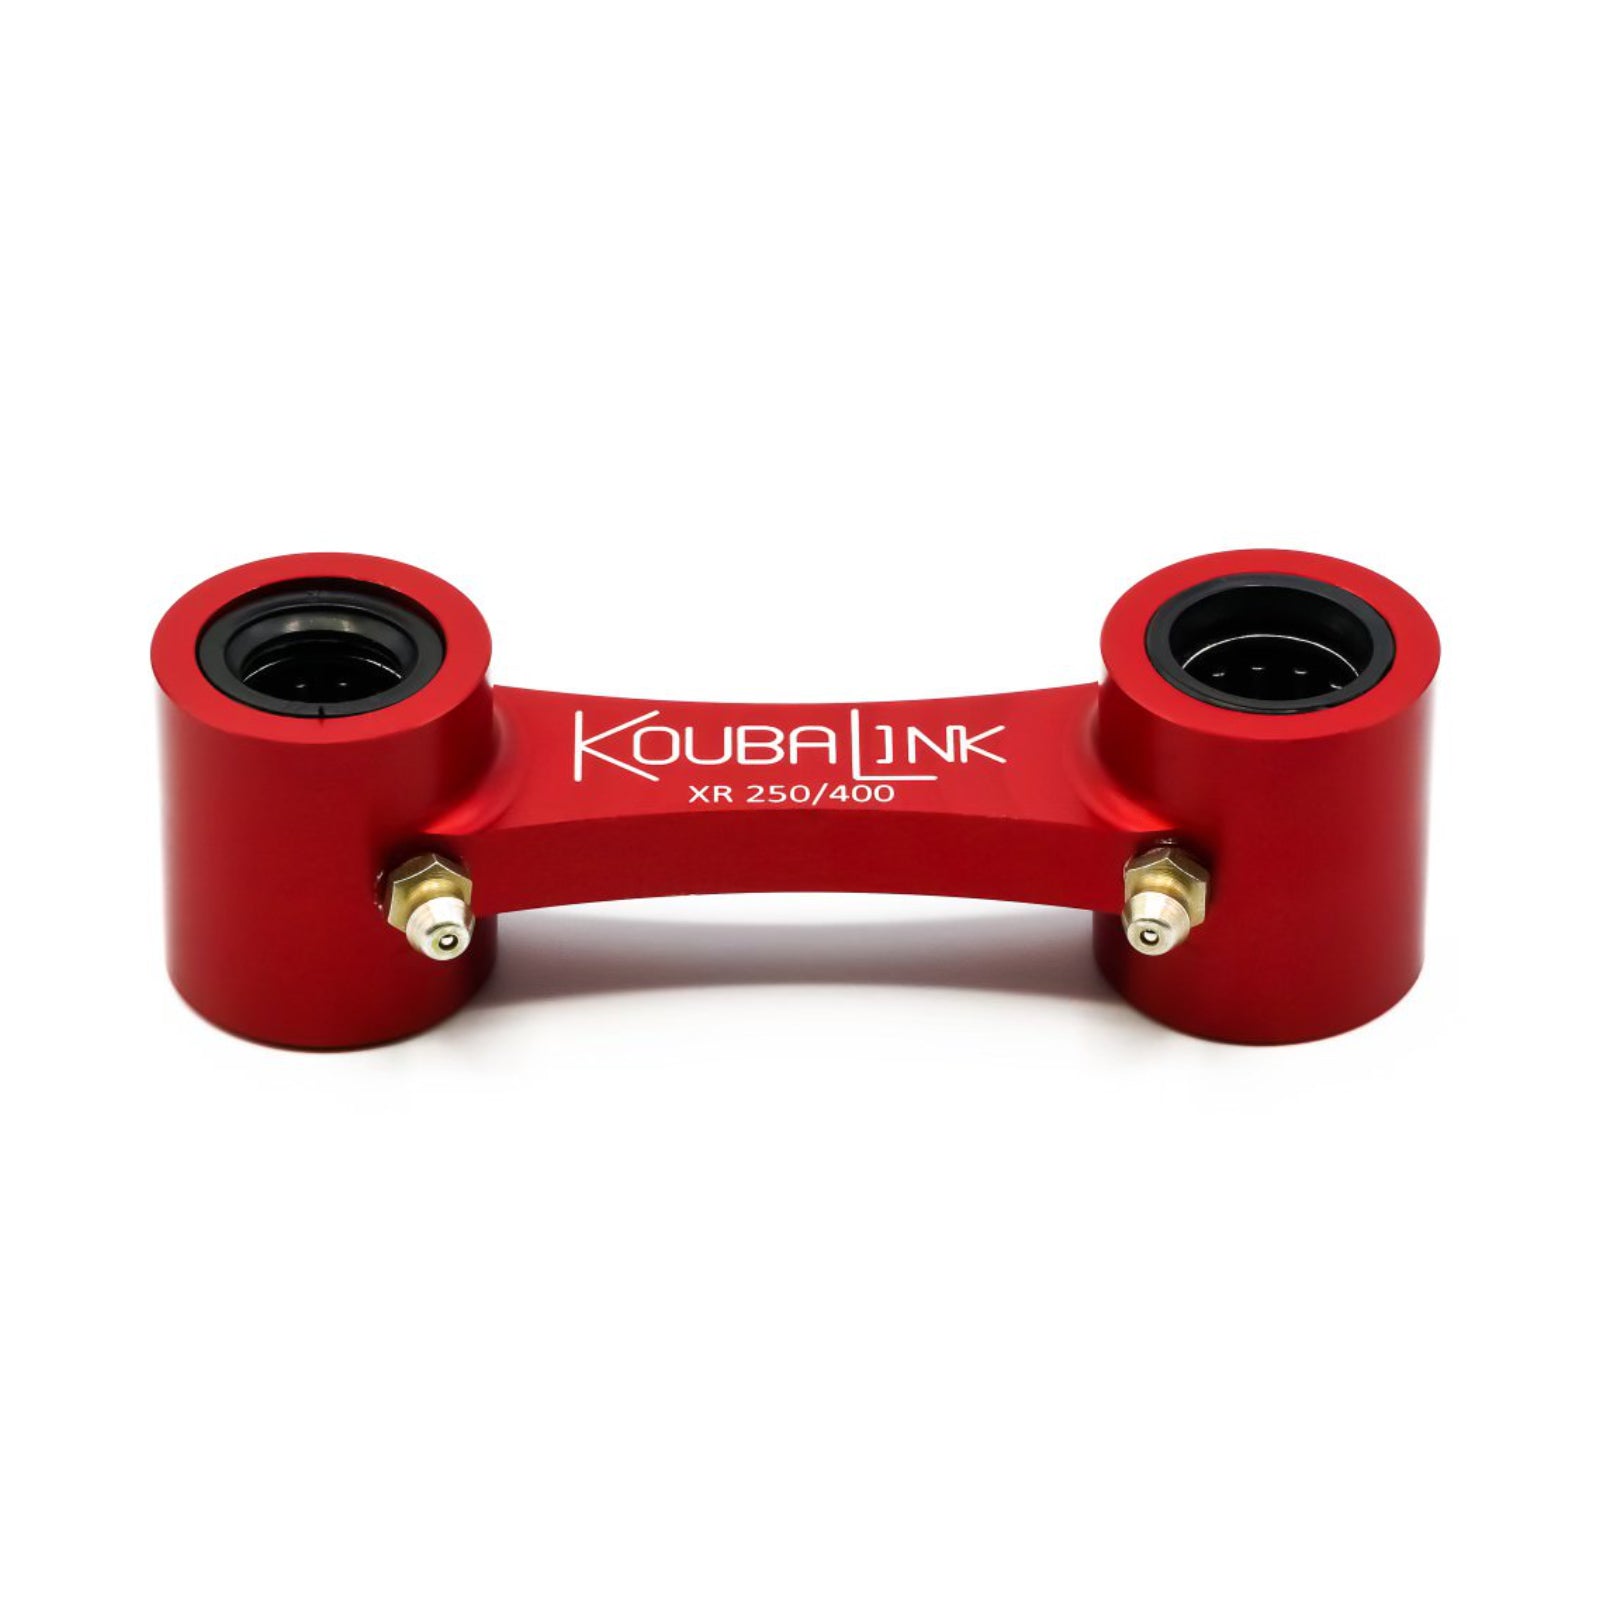 New KOUBALINK 25mm Lowering Linkage For Honda XR250/400 - Red #KBLXR250400